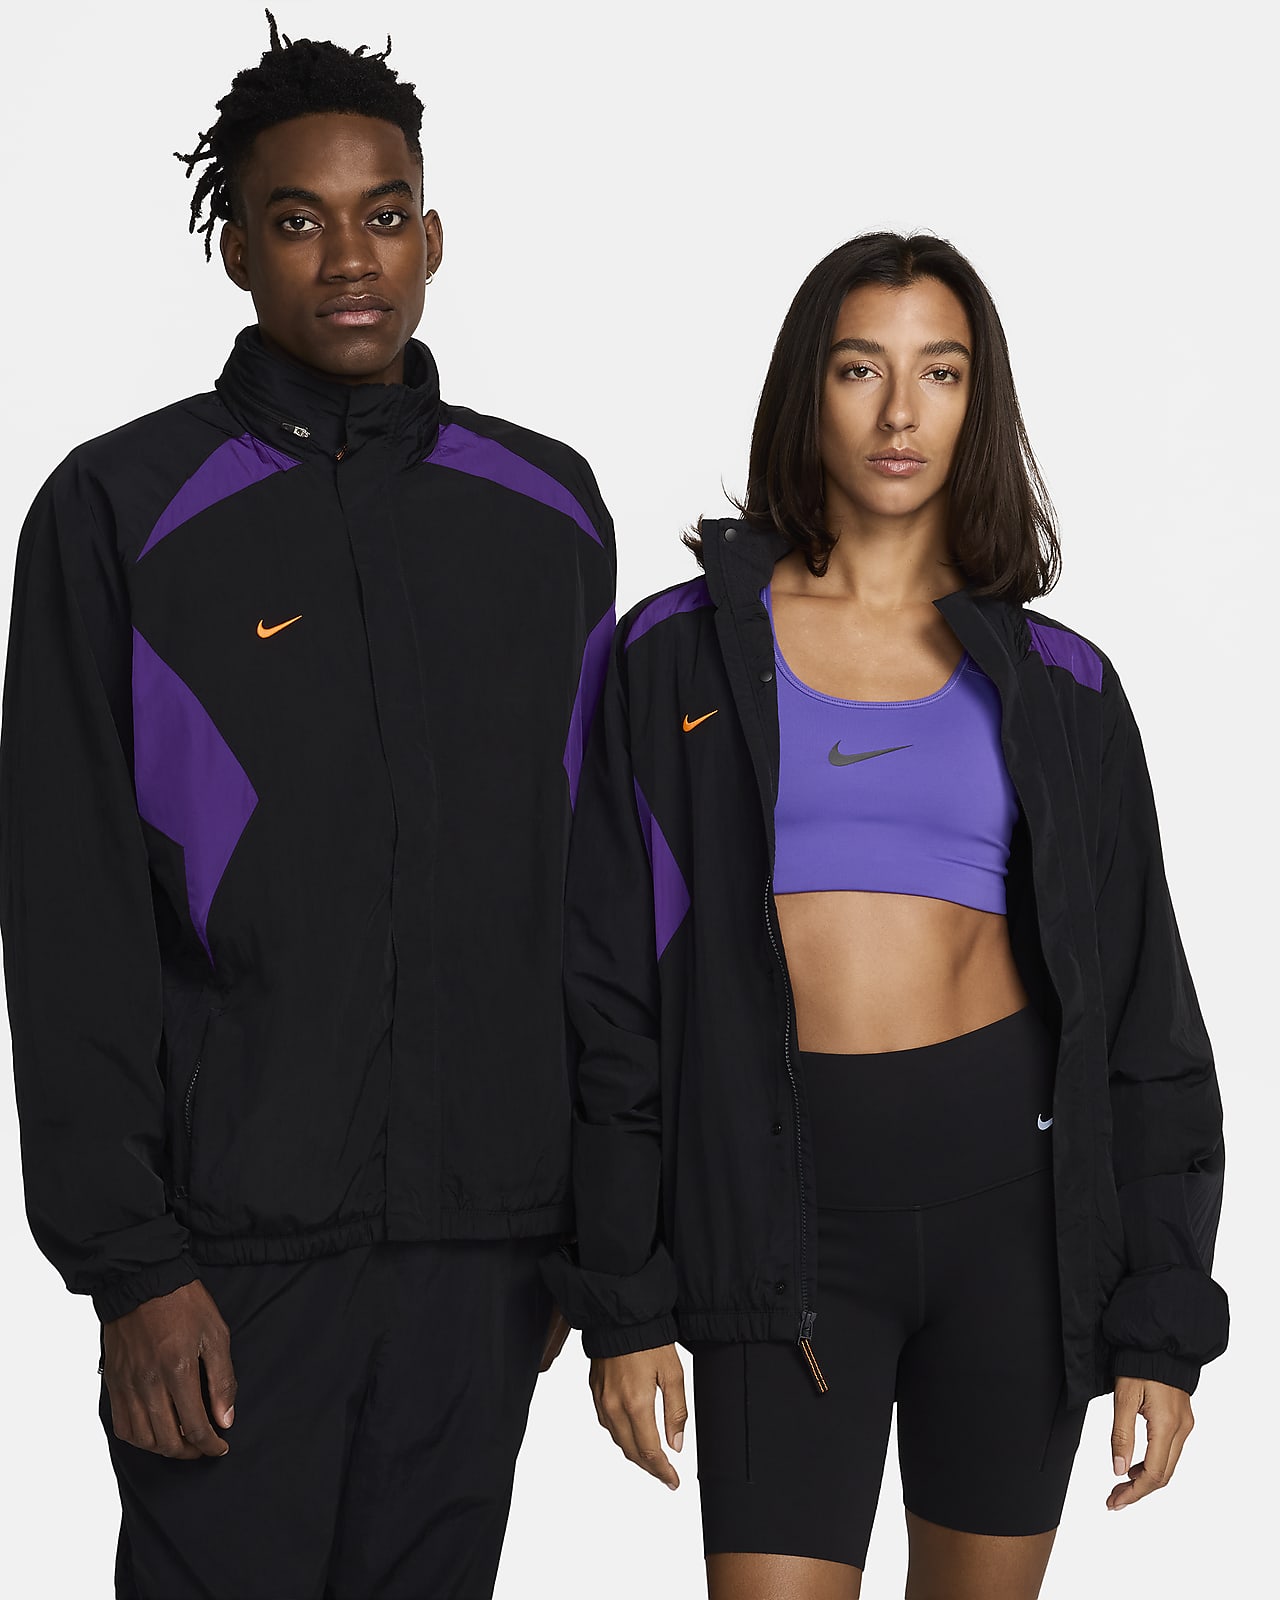 Nike Culture of Football Therma-FIT Repel kapucnis férfi futballkabát